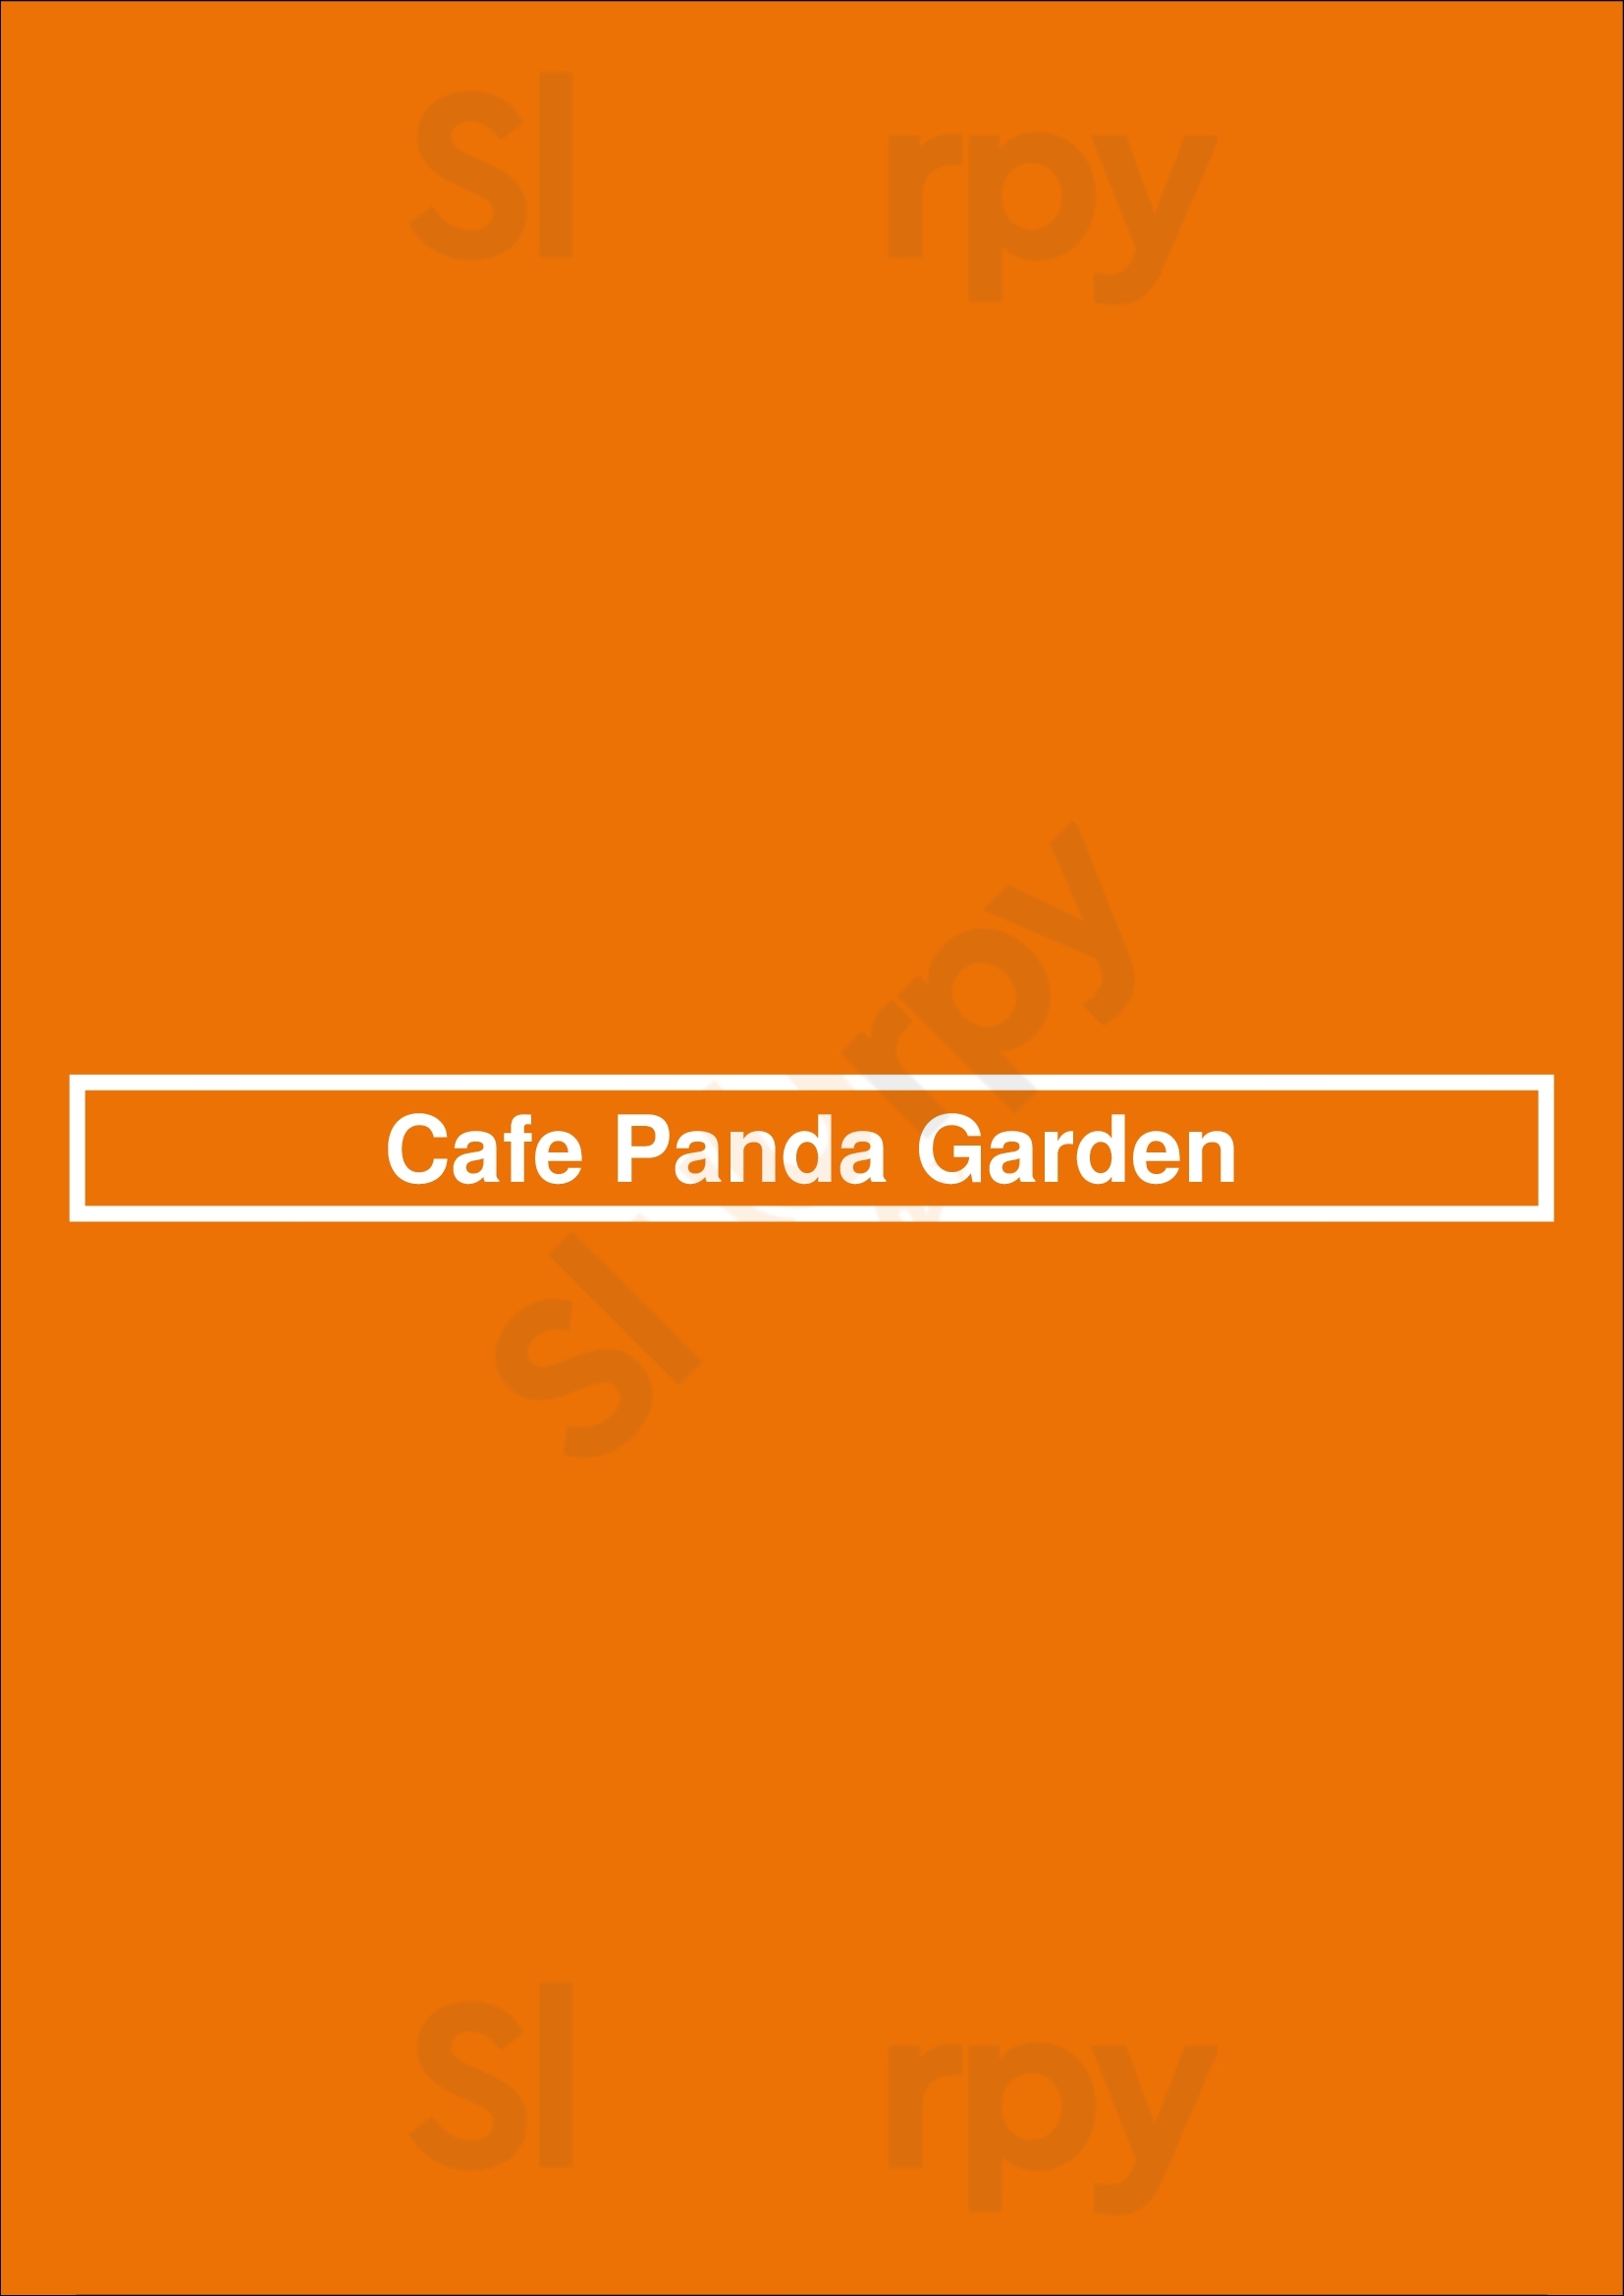 Cafe Panda Garden Houston Menu - 1